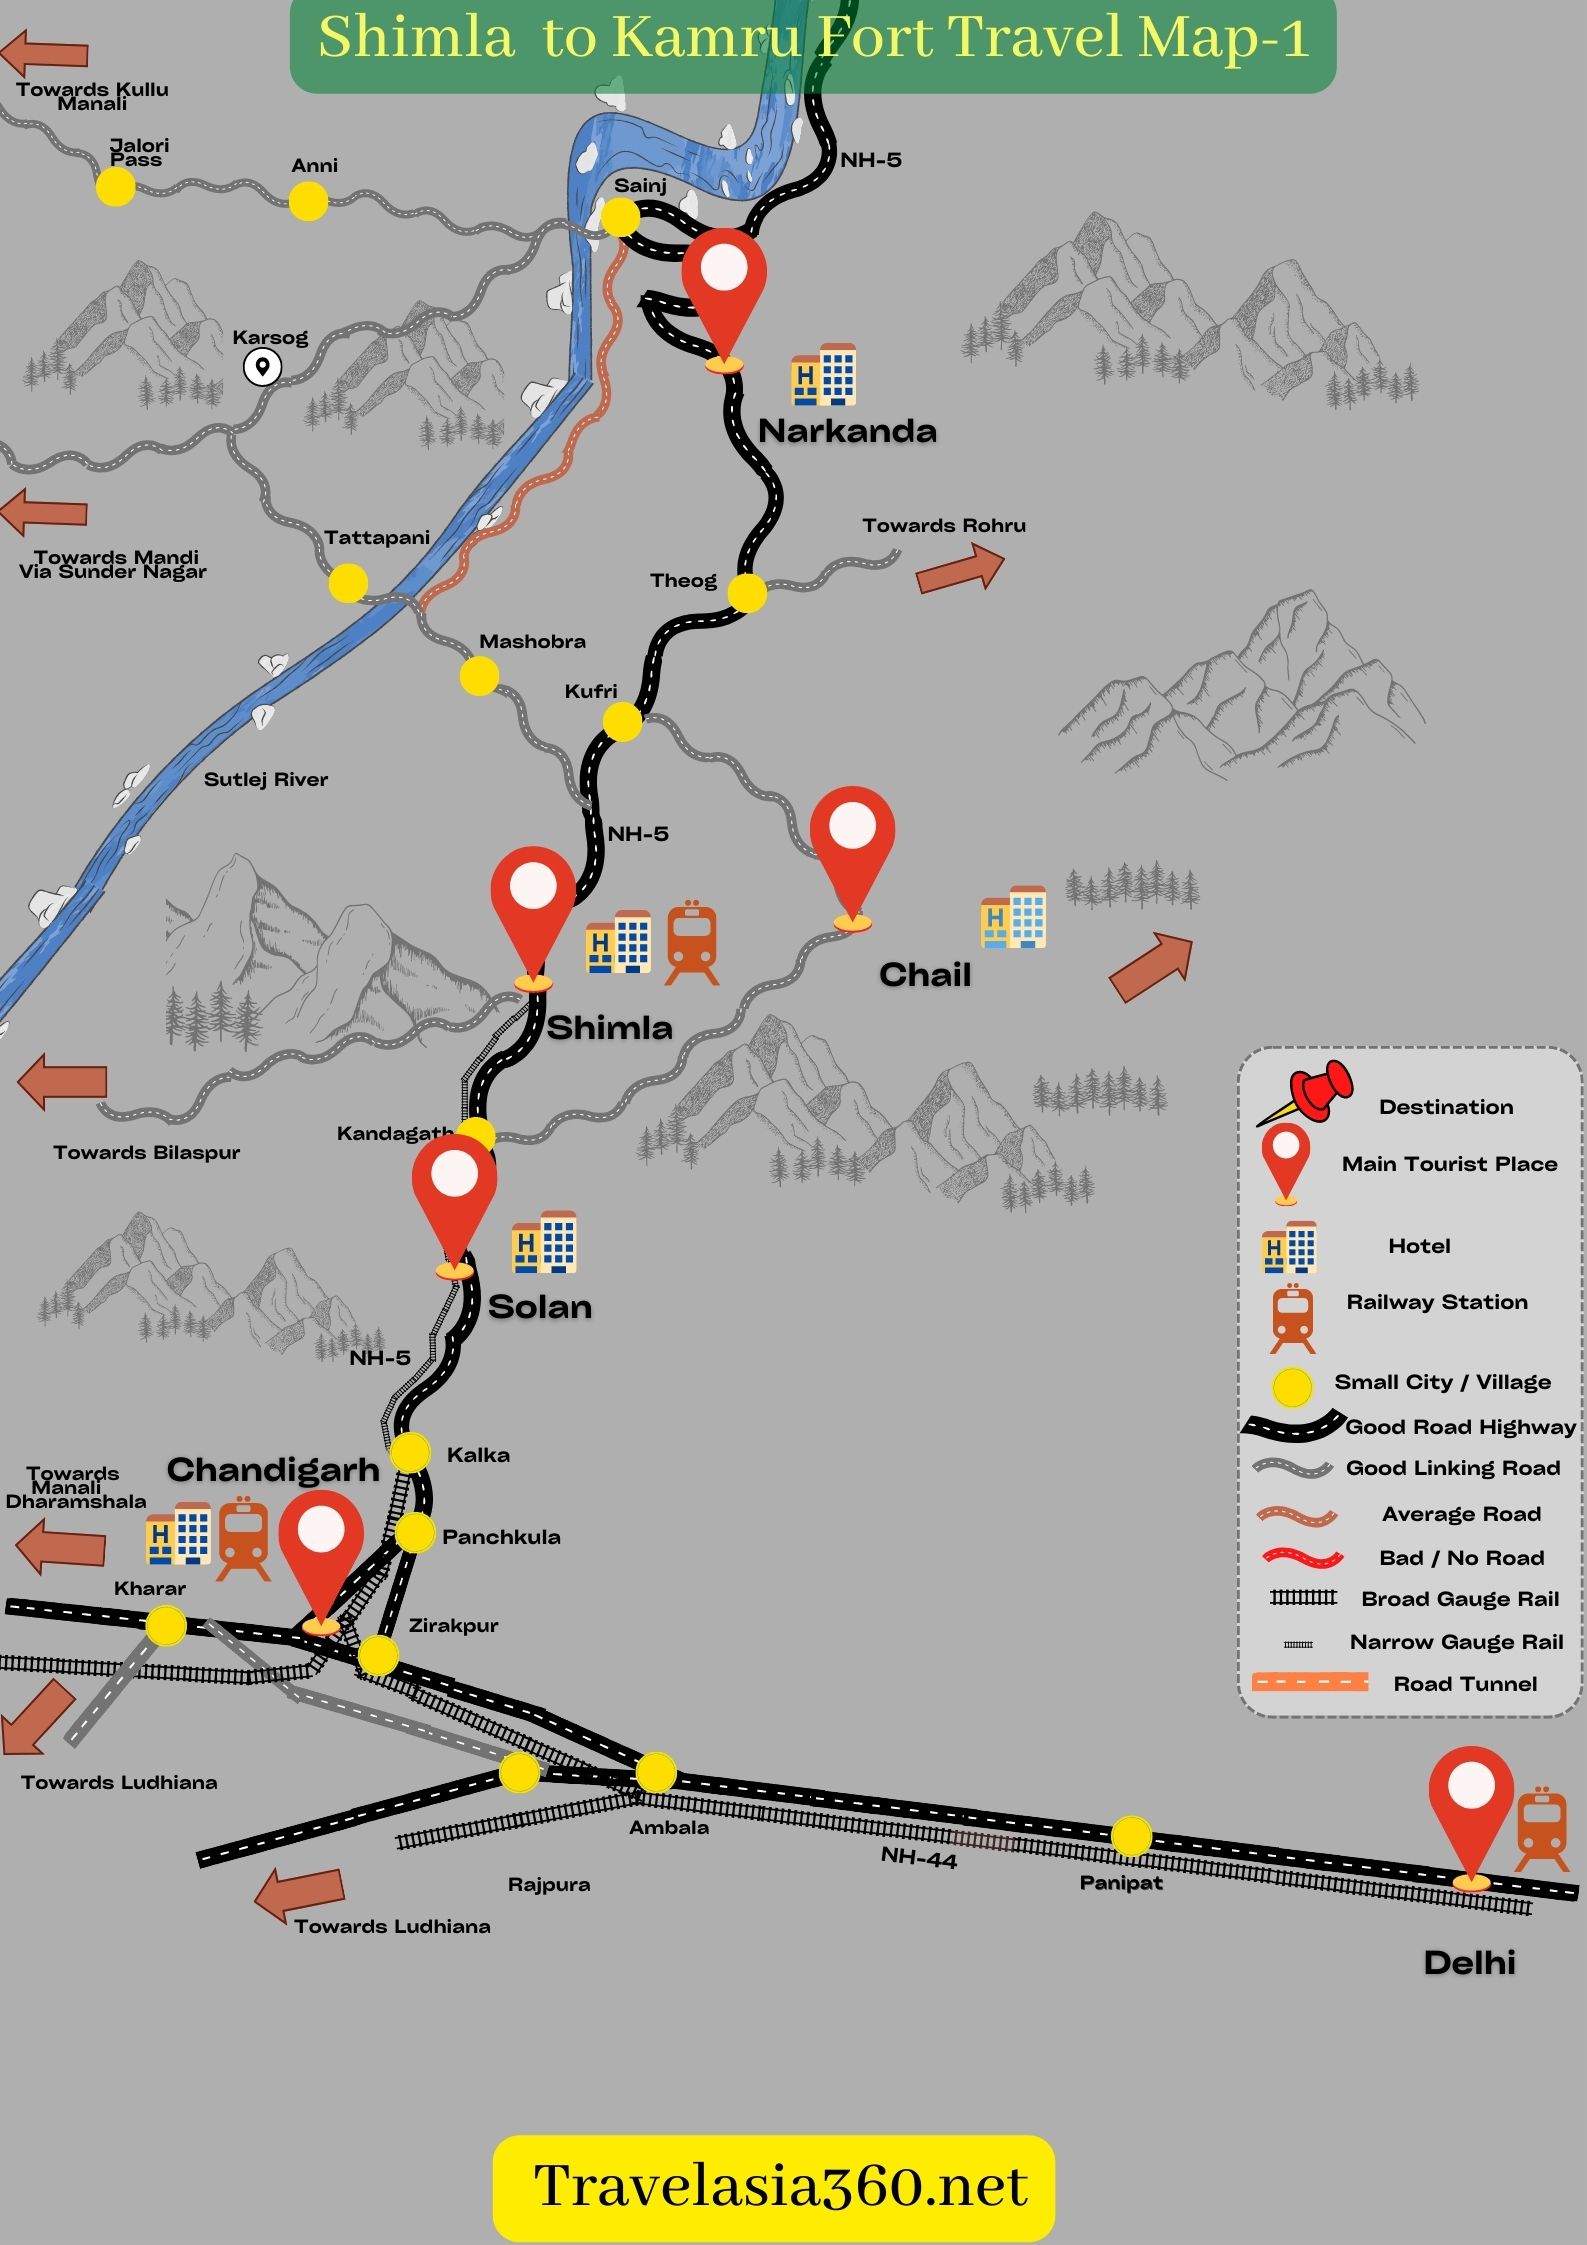 How to reach Kamru Fort from Shimla